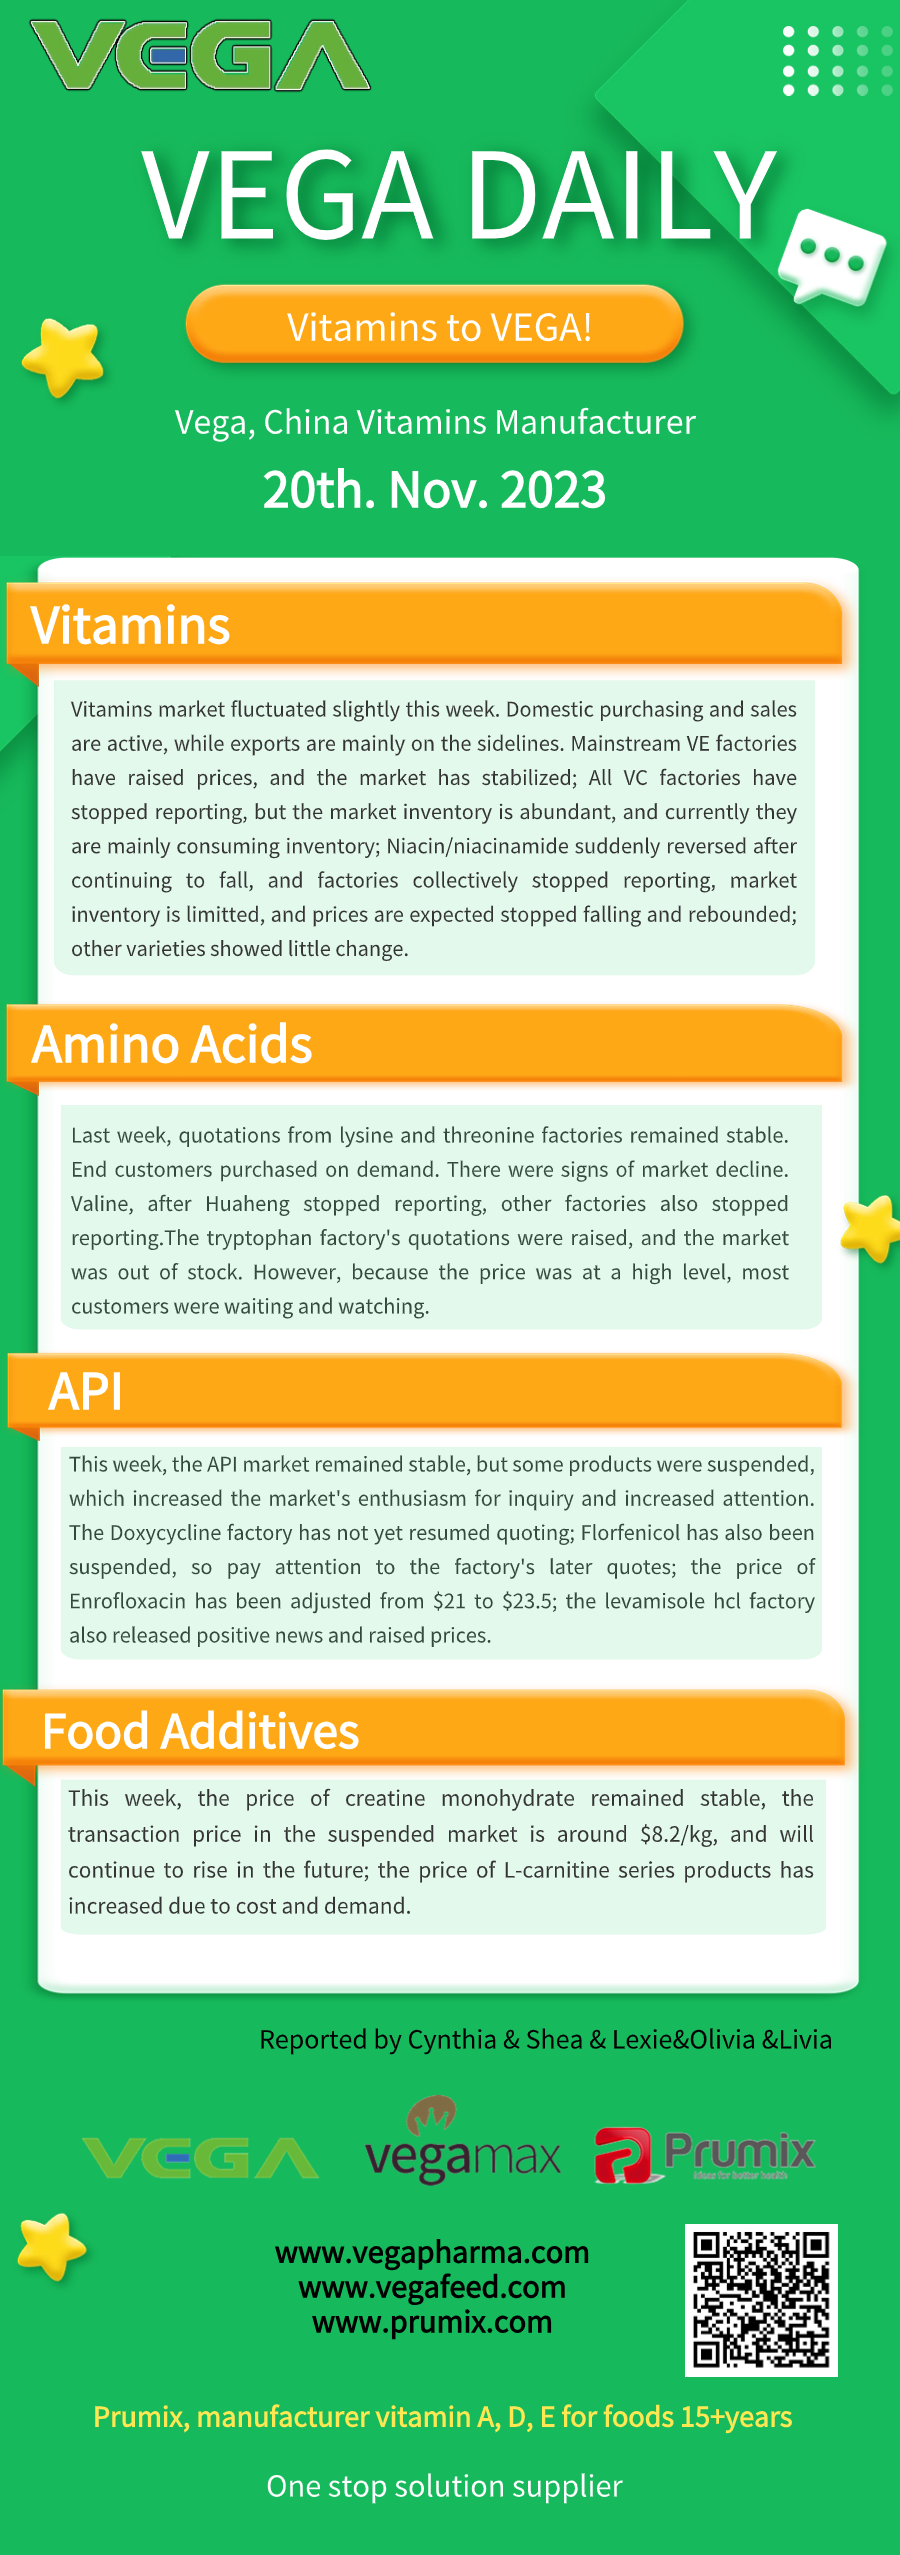 Vega Daily Dated on Nov 20th 2023 Vitamin Amino Acid API Food Additives.png